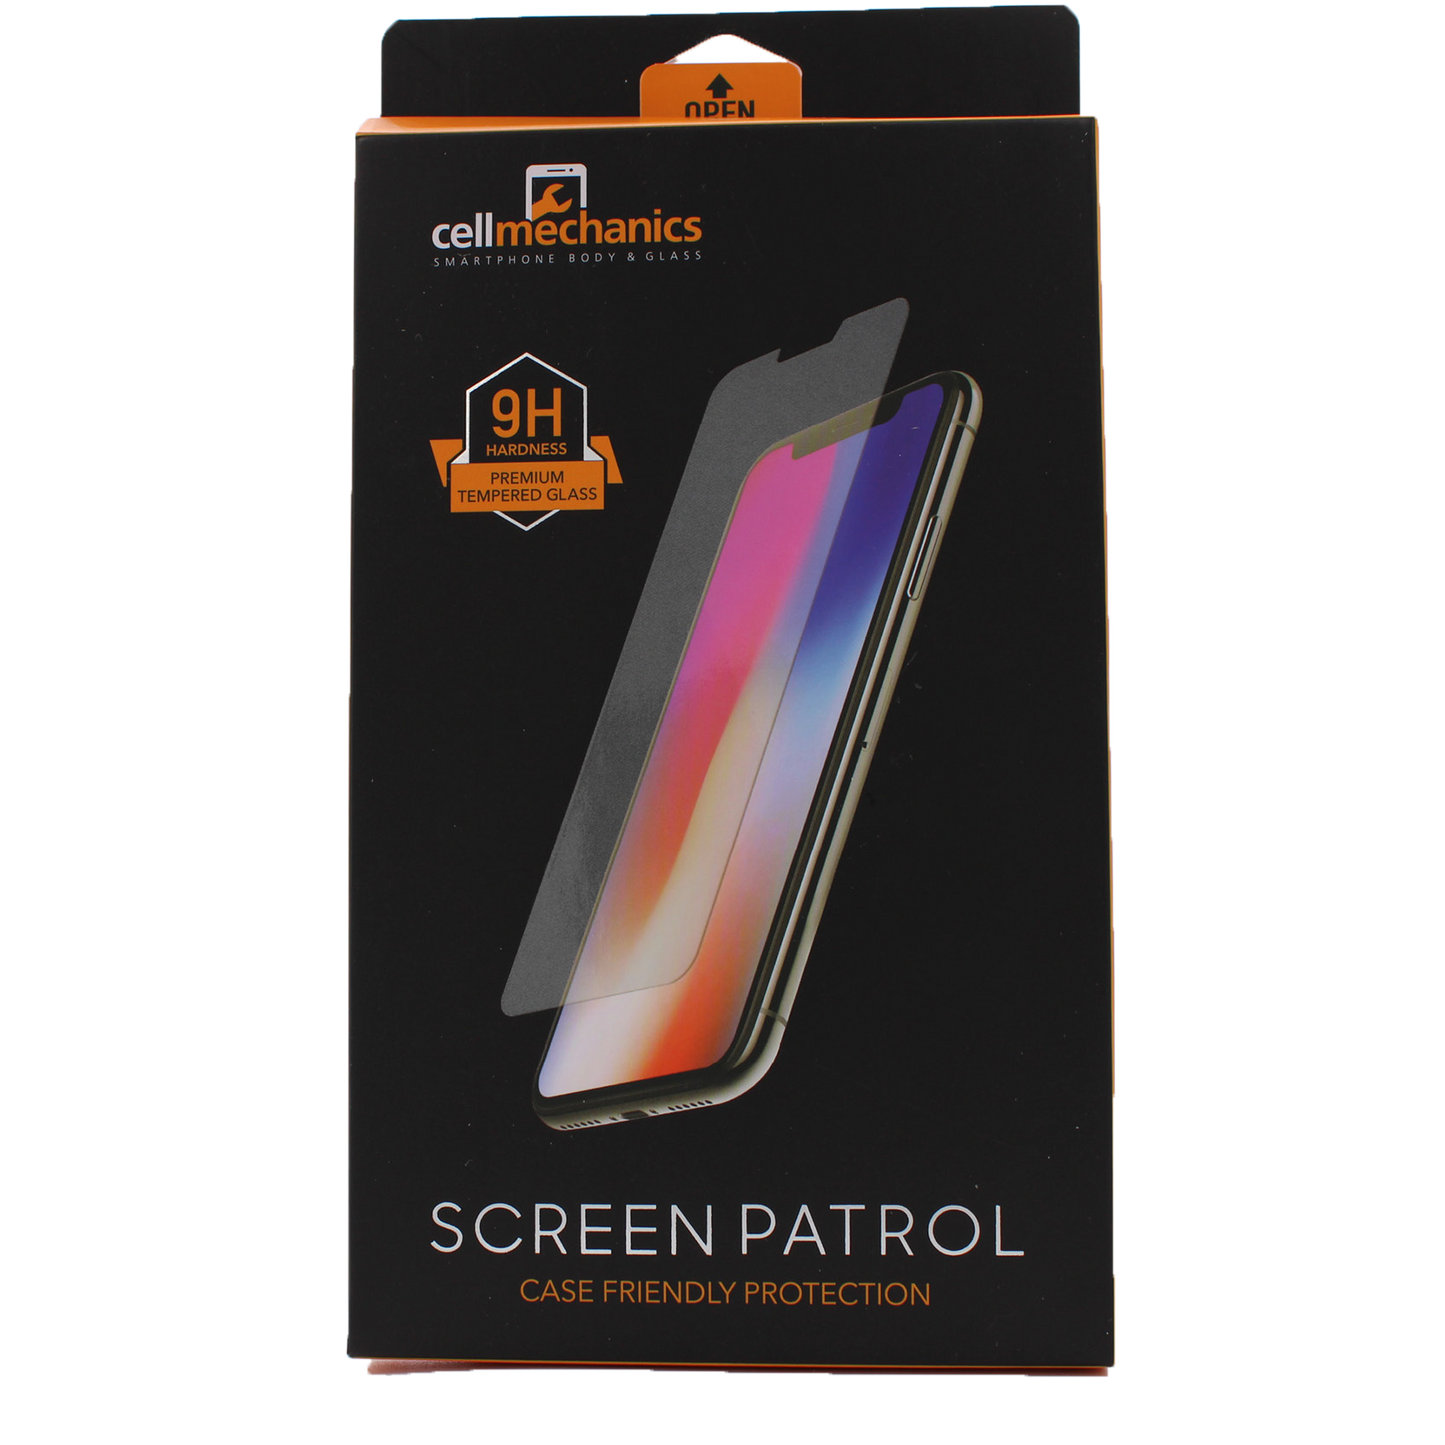 LG G7 Thinq Screen Patrol Tempered Glass